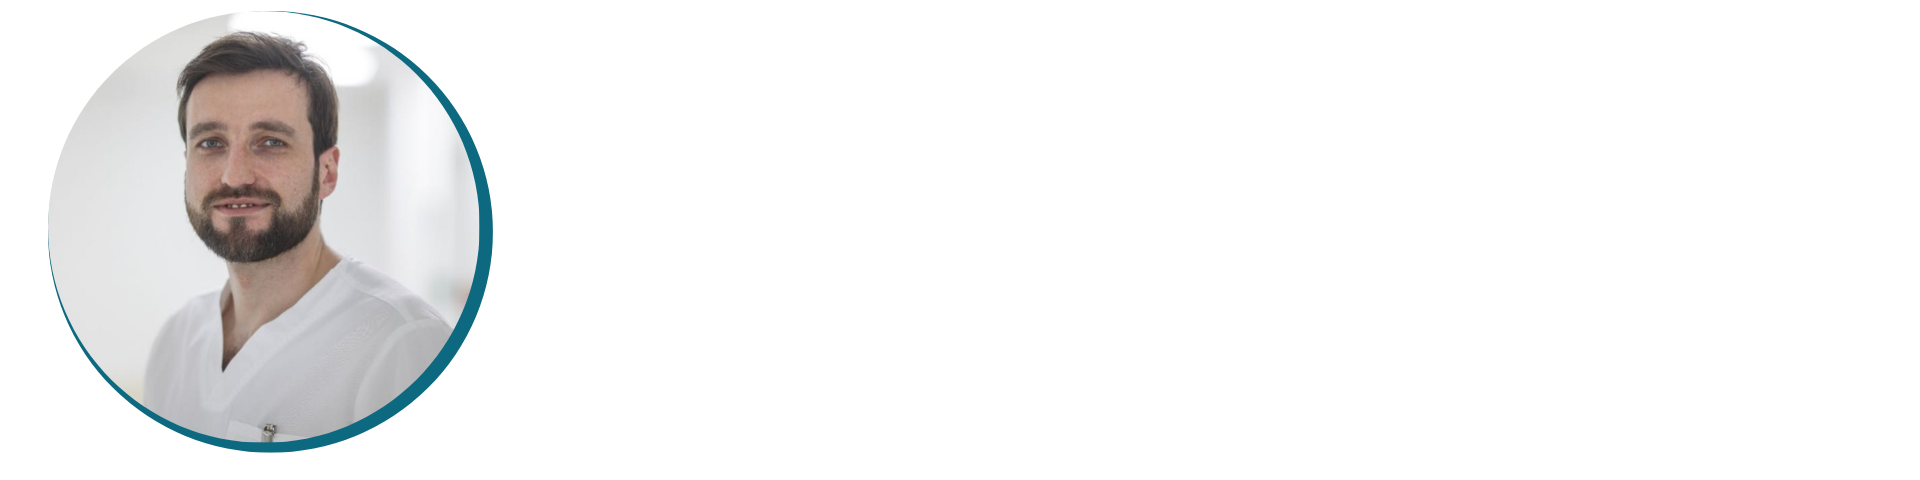 Our Expert Analysis, doctor Razvan Radu from CHU Montpellier, France